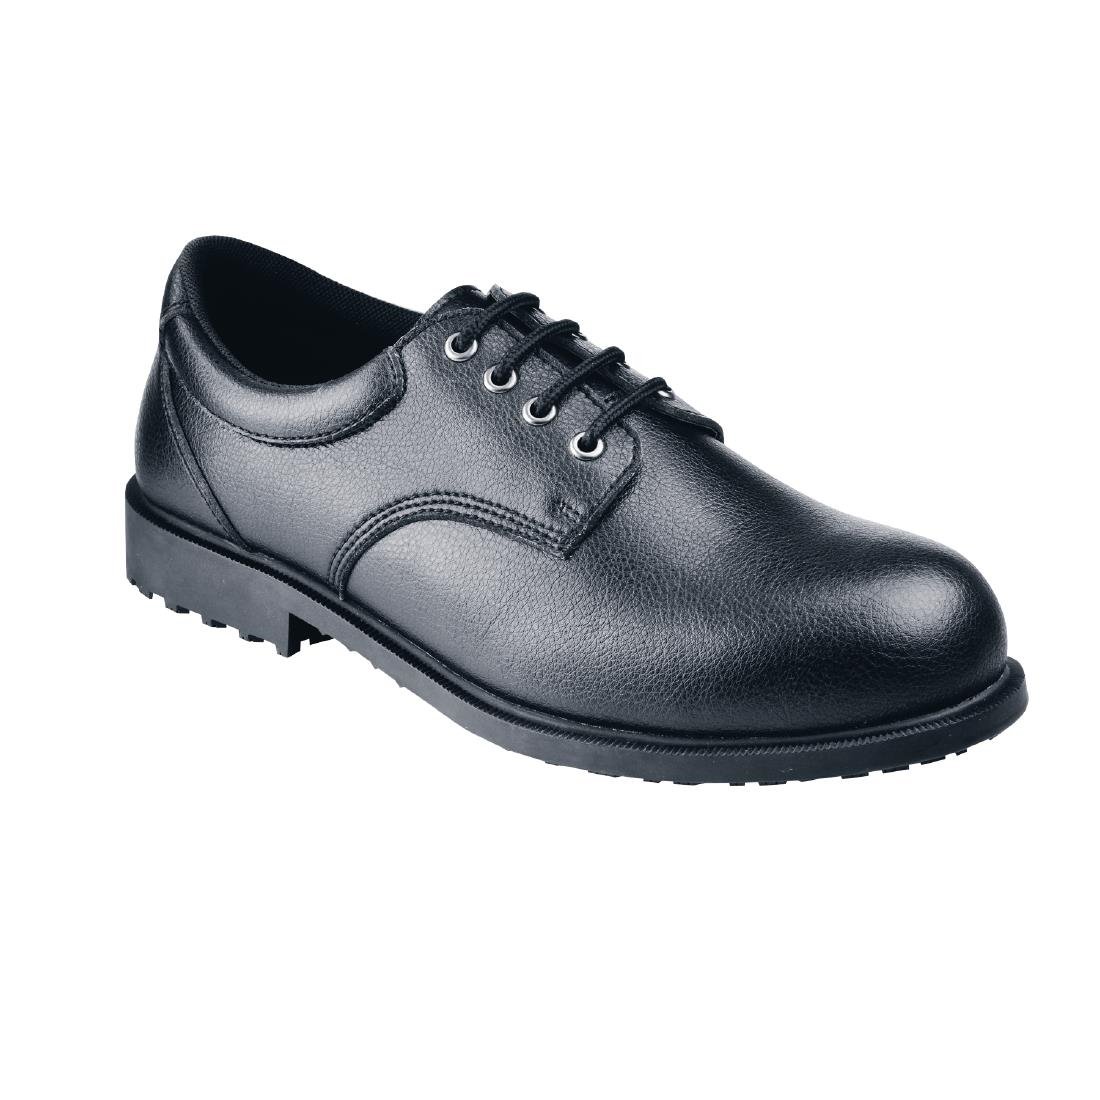 BB611-44 Shoes for Crews Cambridge Steel Toe Dress Shoe Size 44